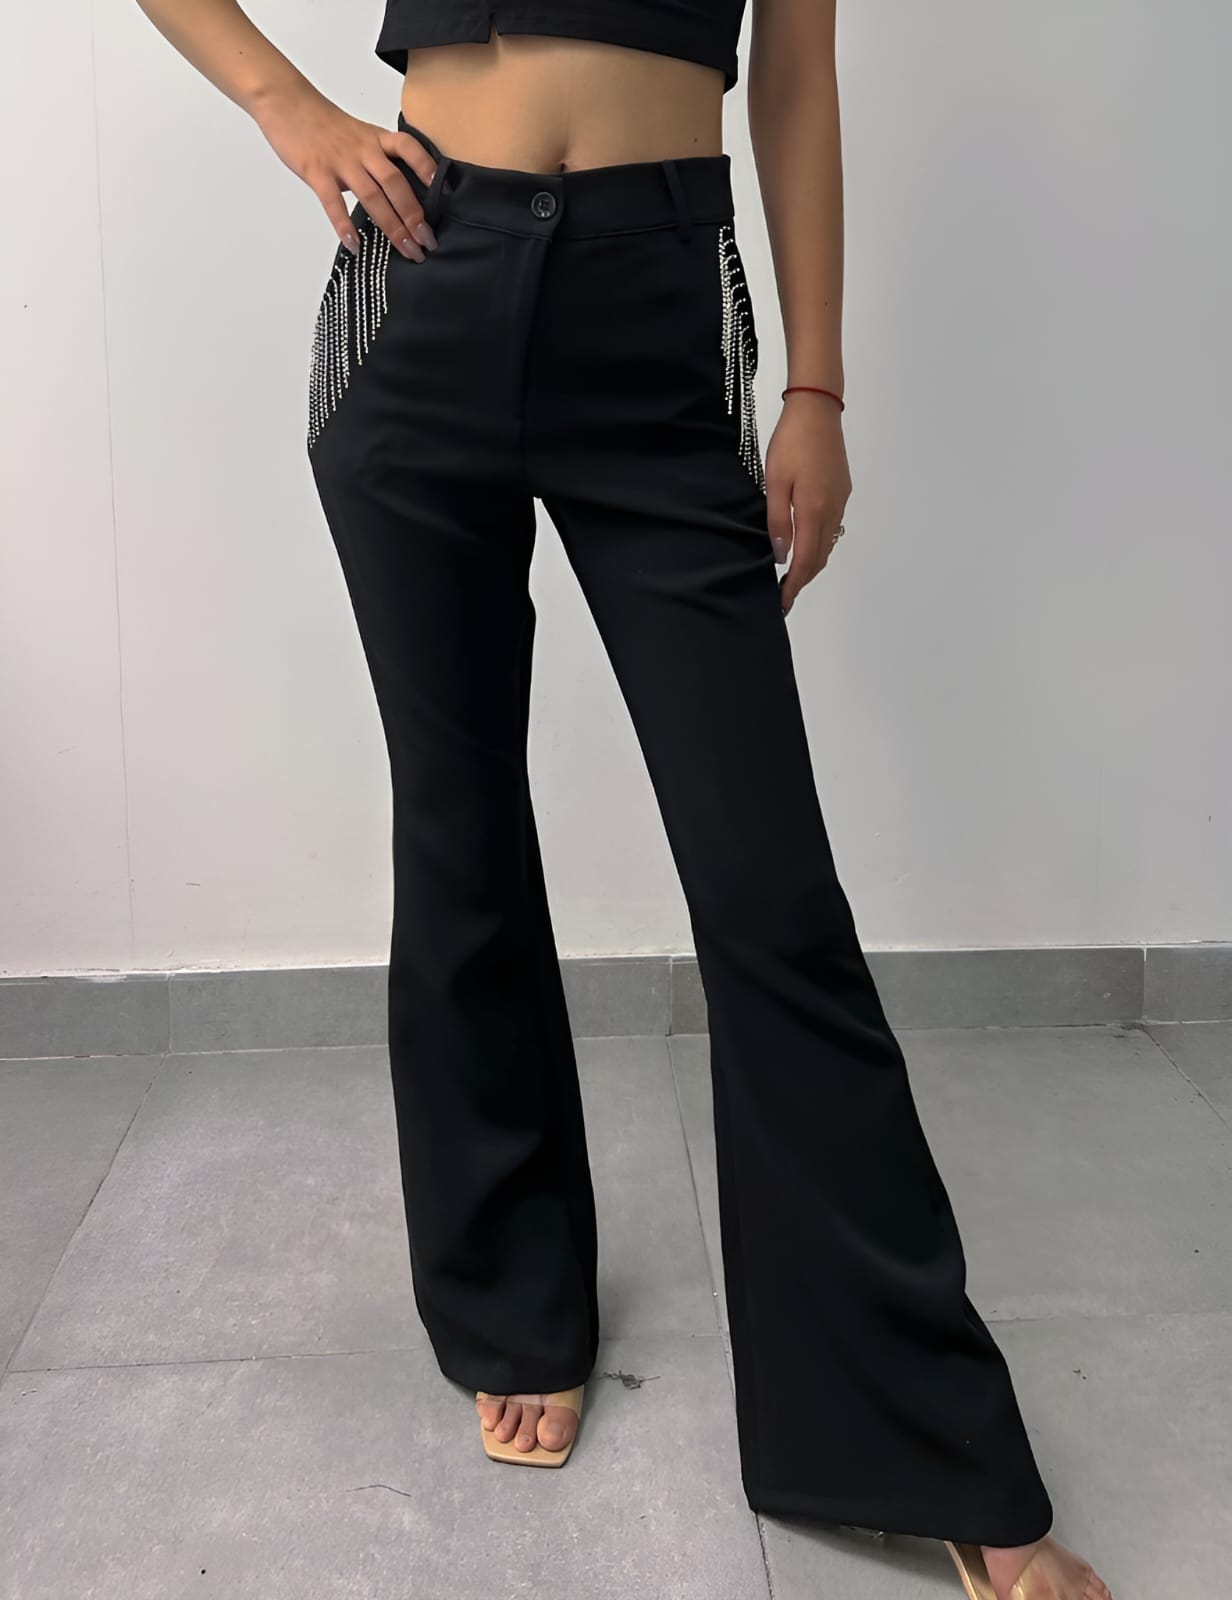 Pantalone Donna Vita Alta Zampa Frange Strass Sensuale Elegante - LE STYLE DE PARIS